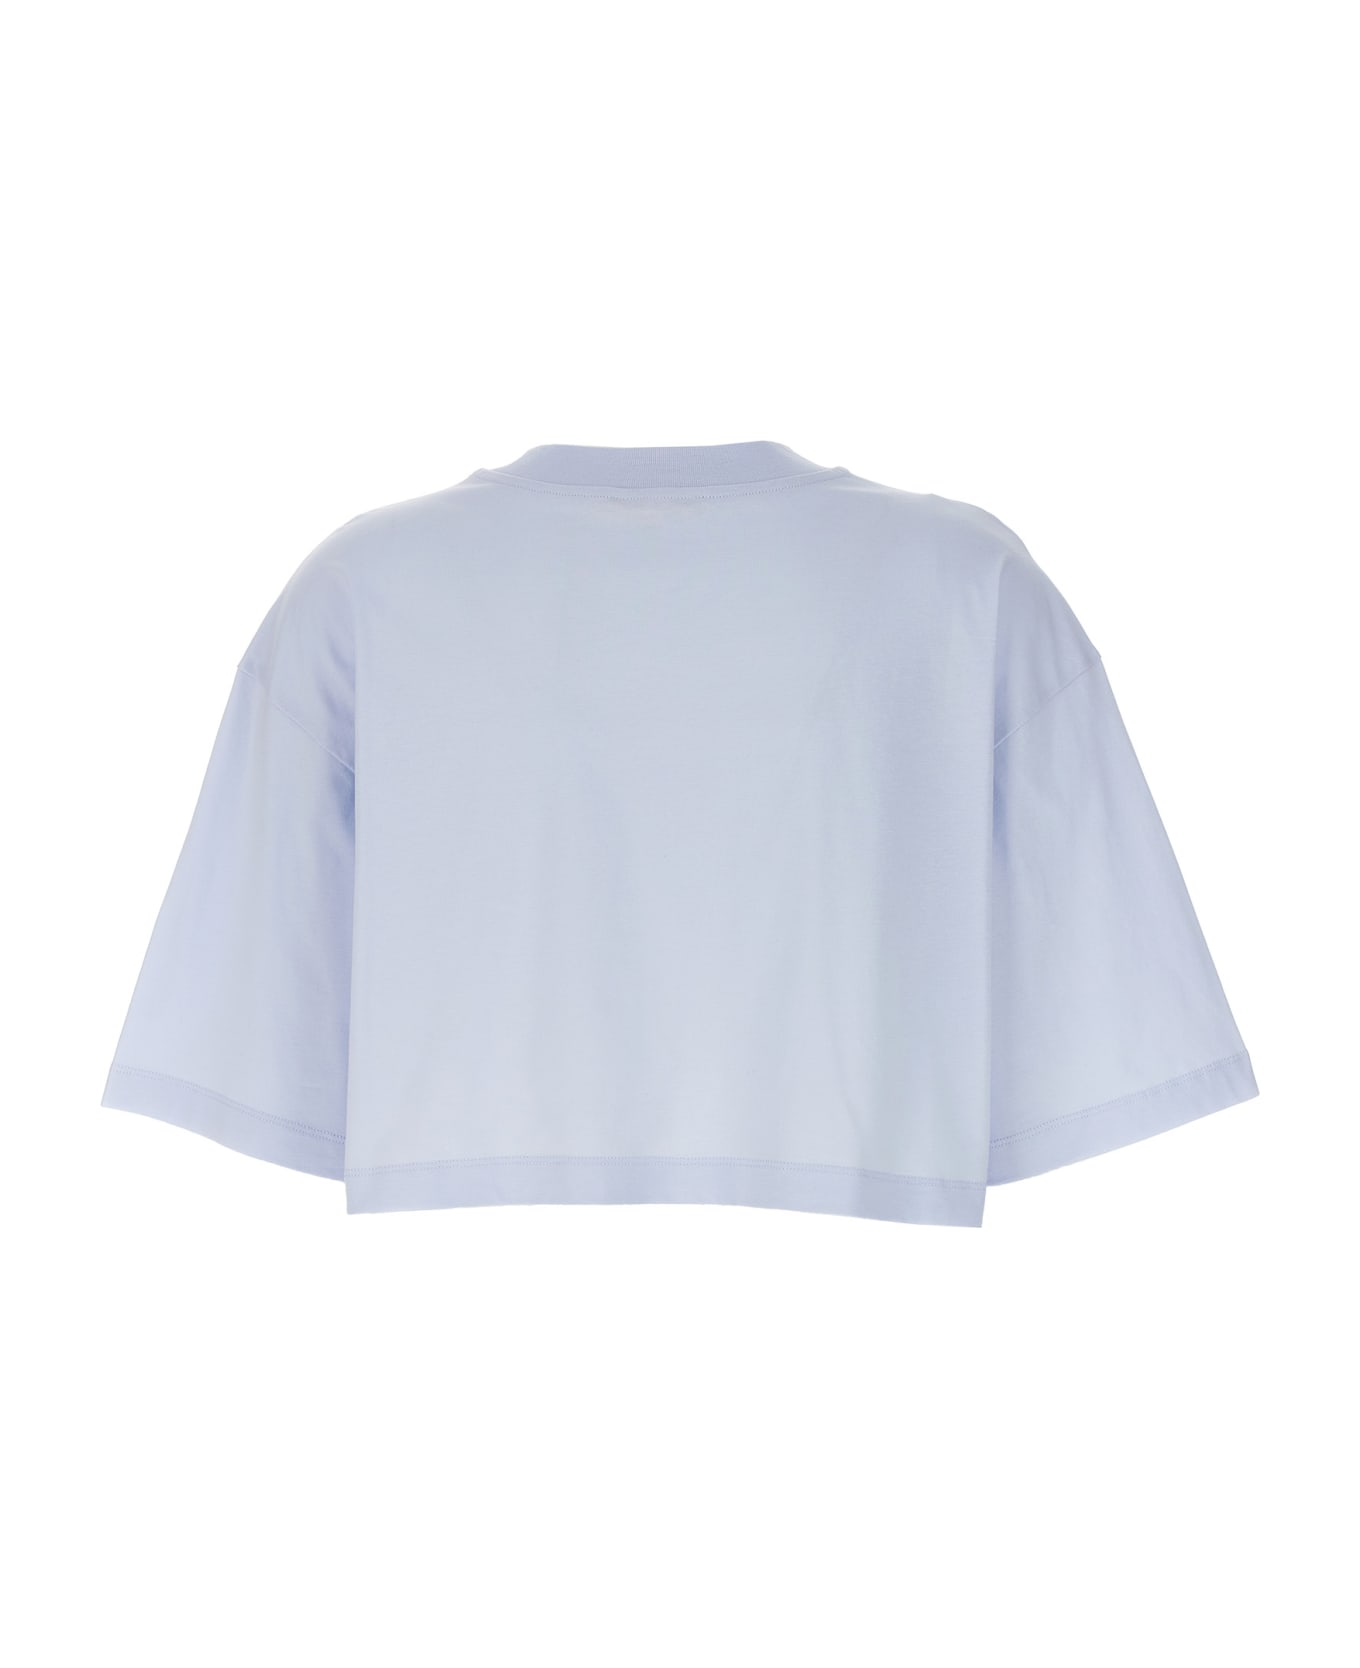 Marni Logo Print Cropped T-shirt - Azzurro/blu Tシャツ